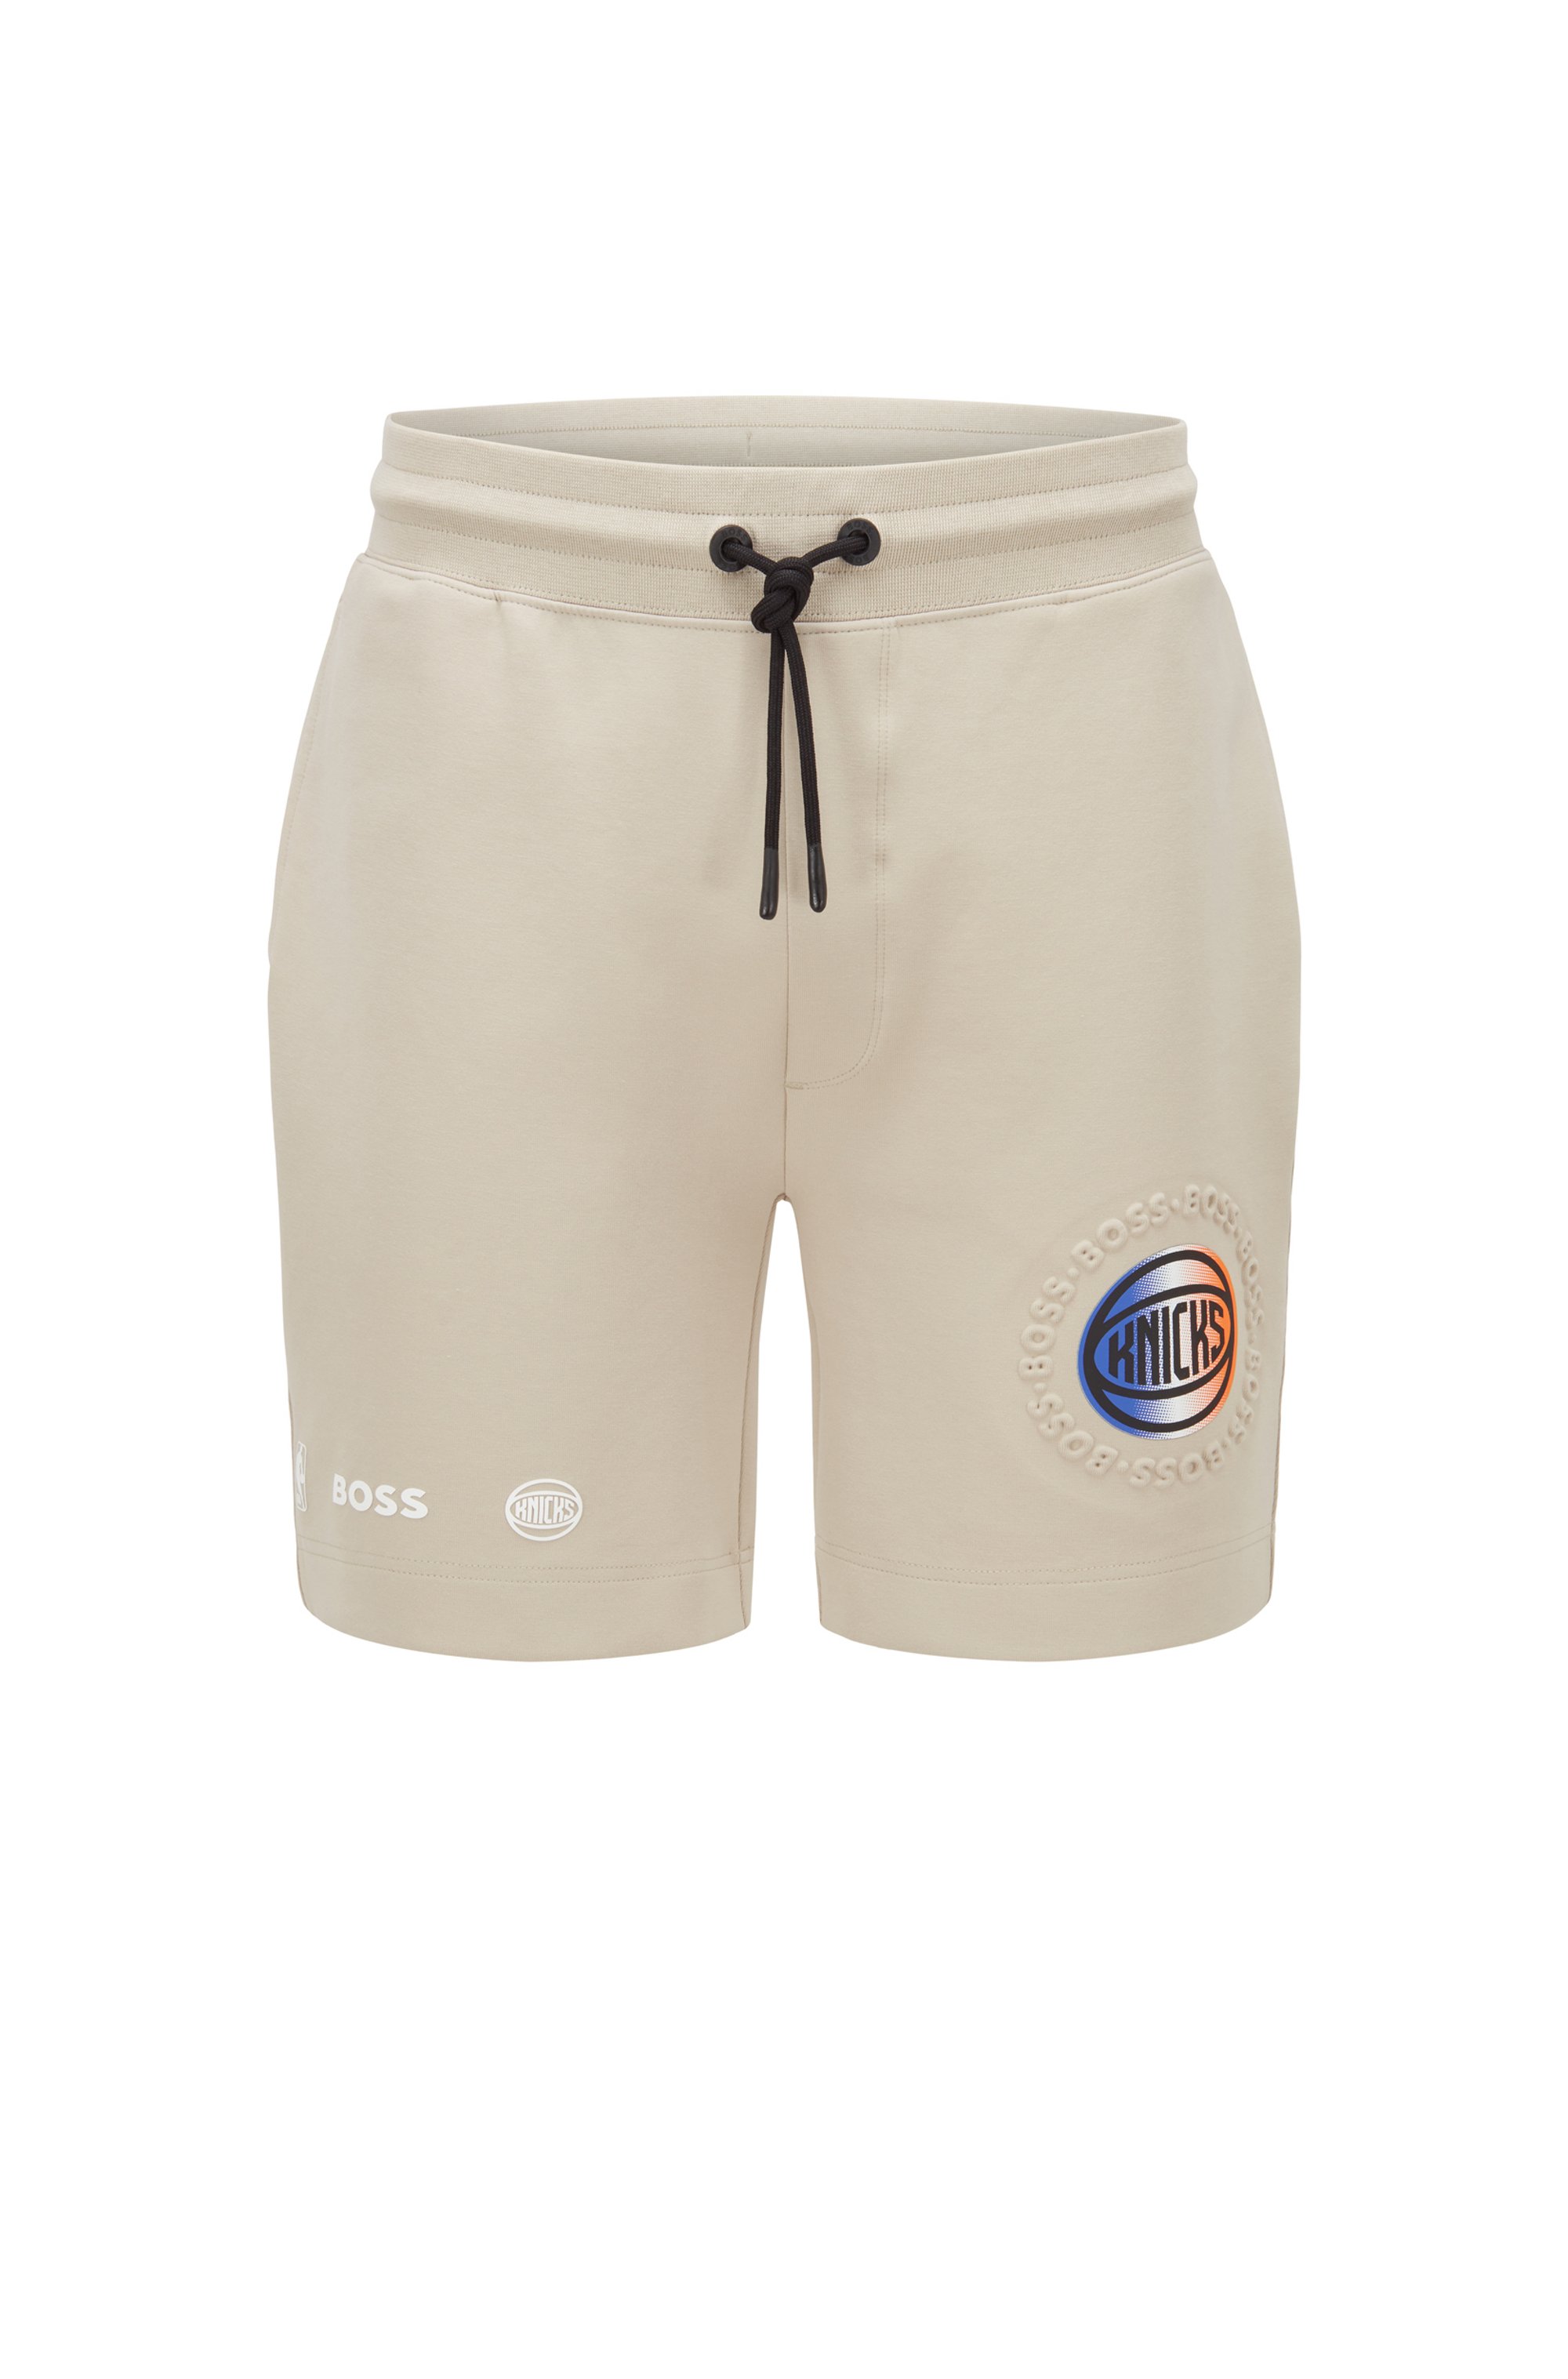 BOSS & NBA cotton-blend shorts with bold branding, NBA KNICKS